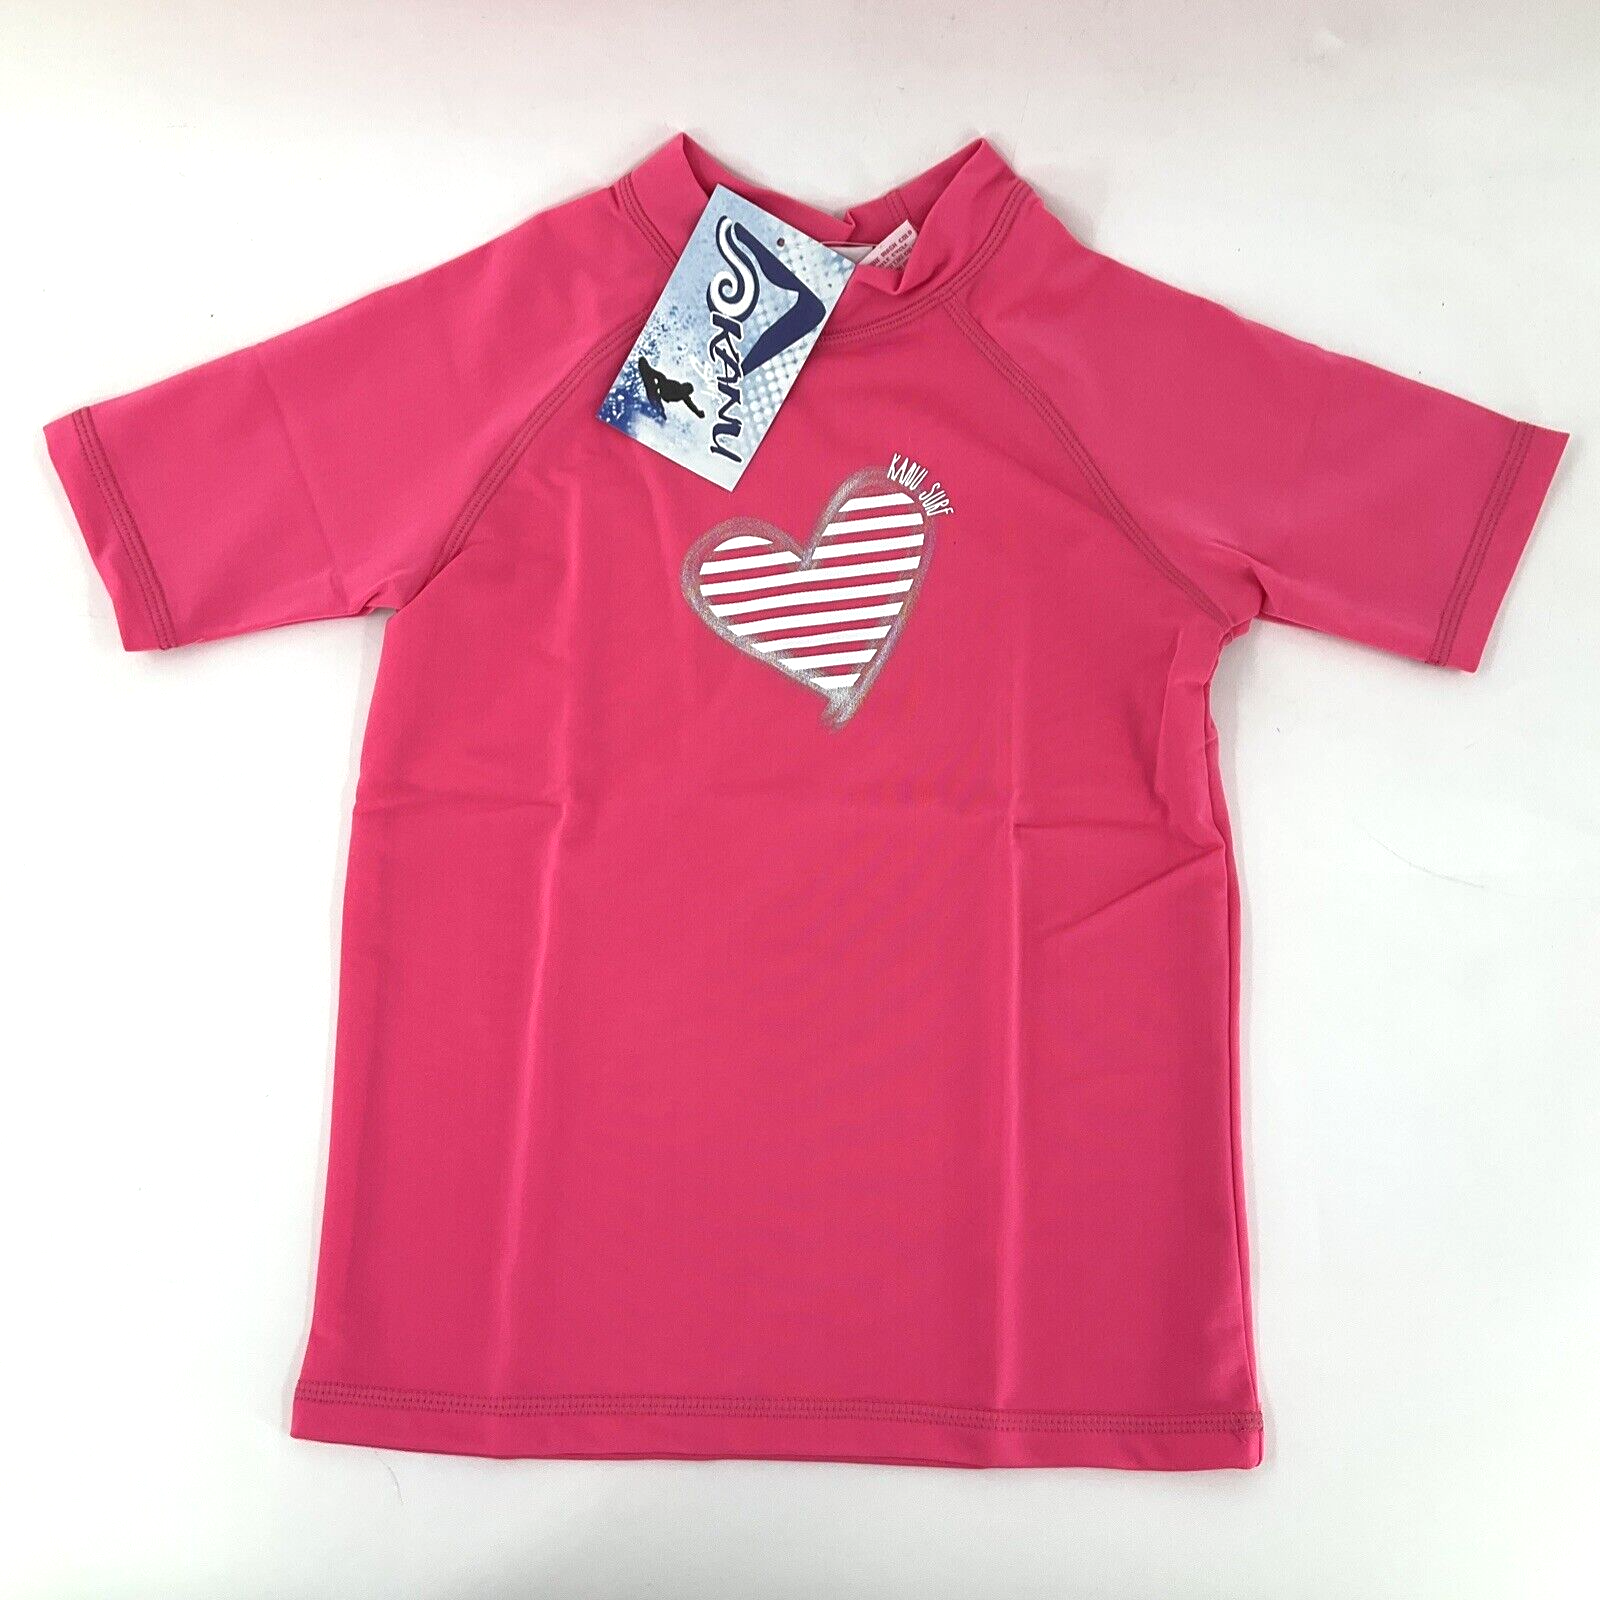 Primary image for Kanu Surf Girls Medium Size 10 UPF 50+ Sun Protective Rashguard Swim Shirt Pink